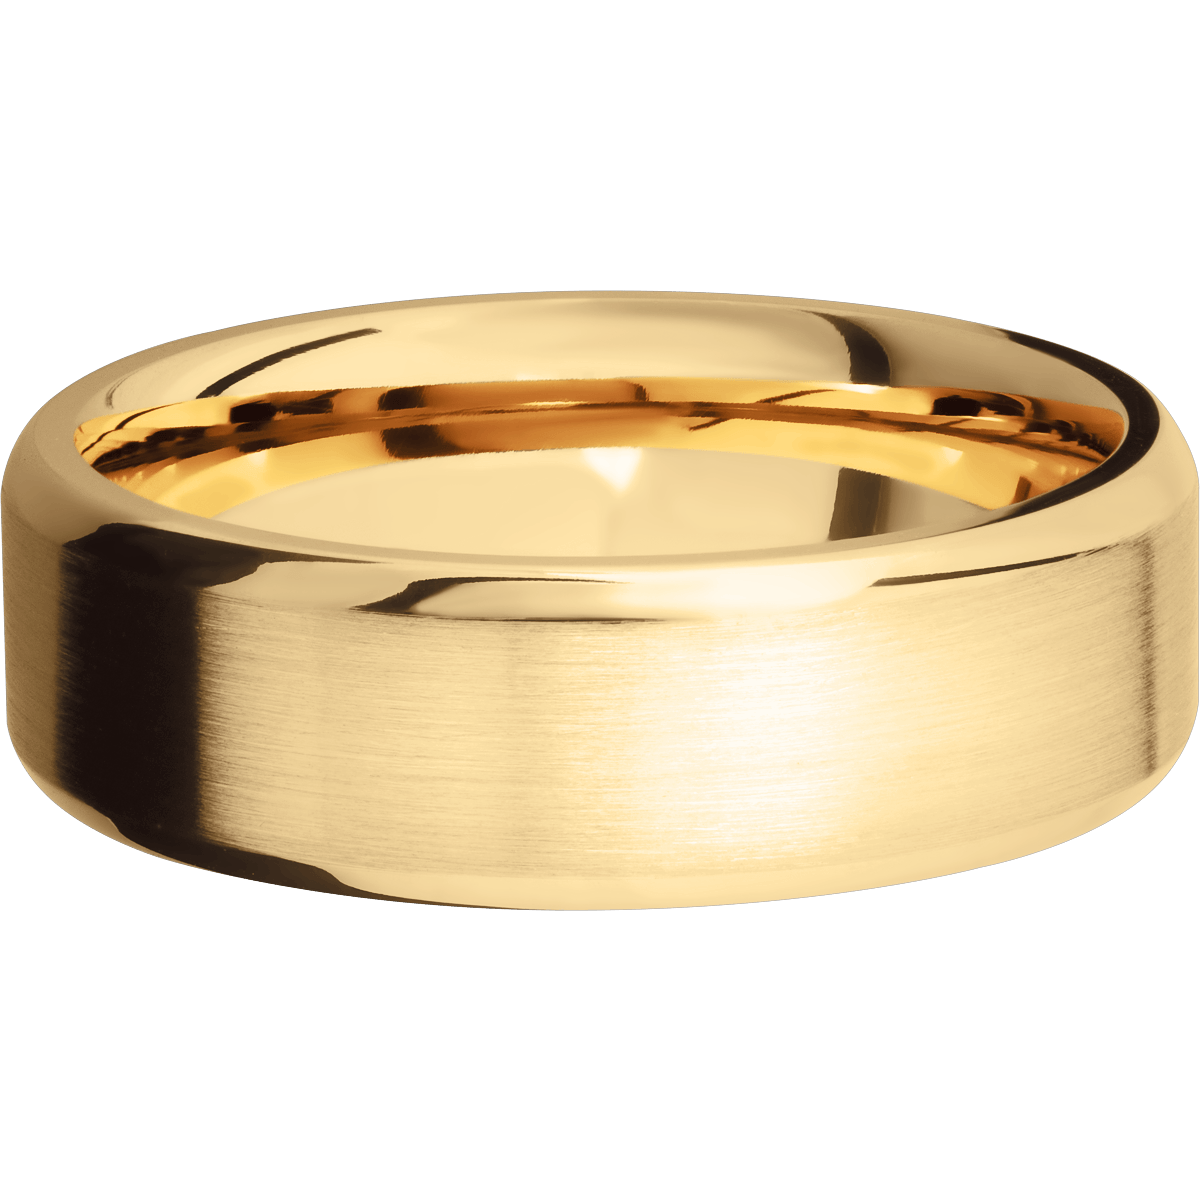 Beveled Comfort Fit Men's Wedding Ring with Satin Finish - Michael E. Minden Diamond Jewelers